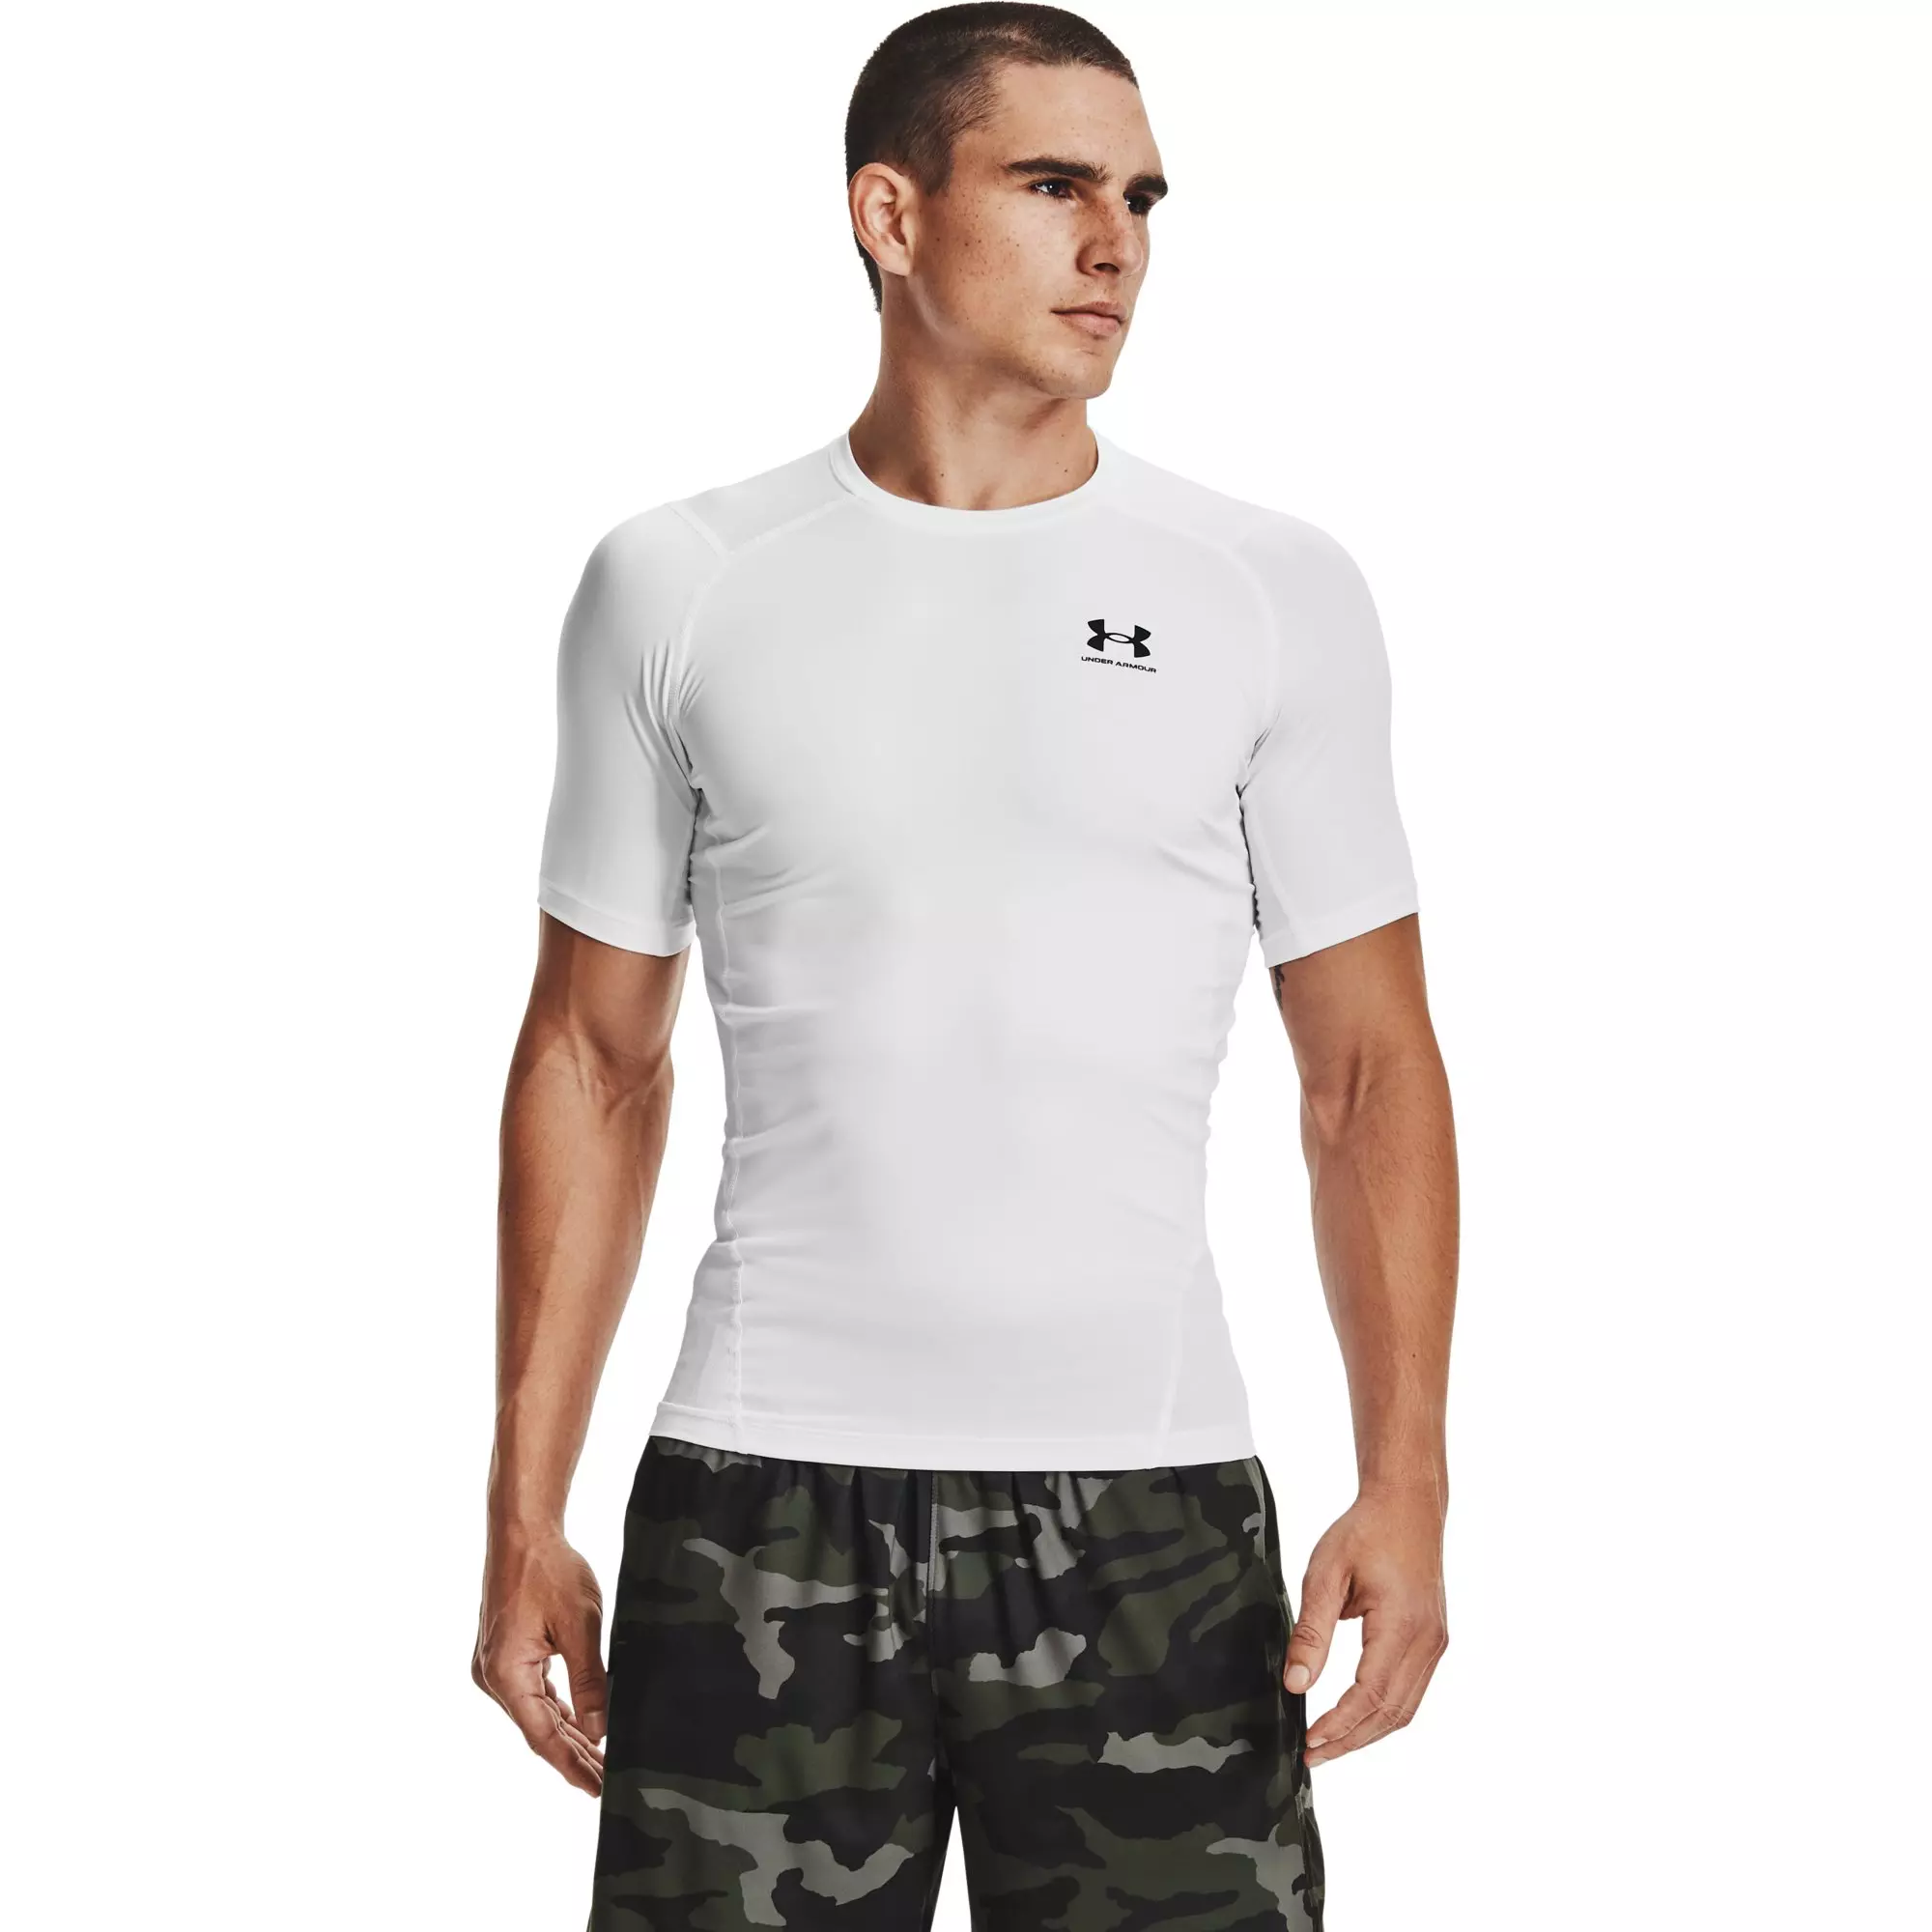 Under Armour Men's HeatGear Compression Shirt - Hibbett